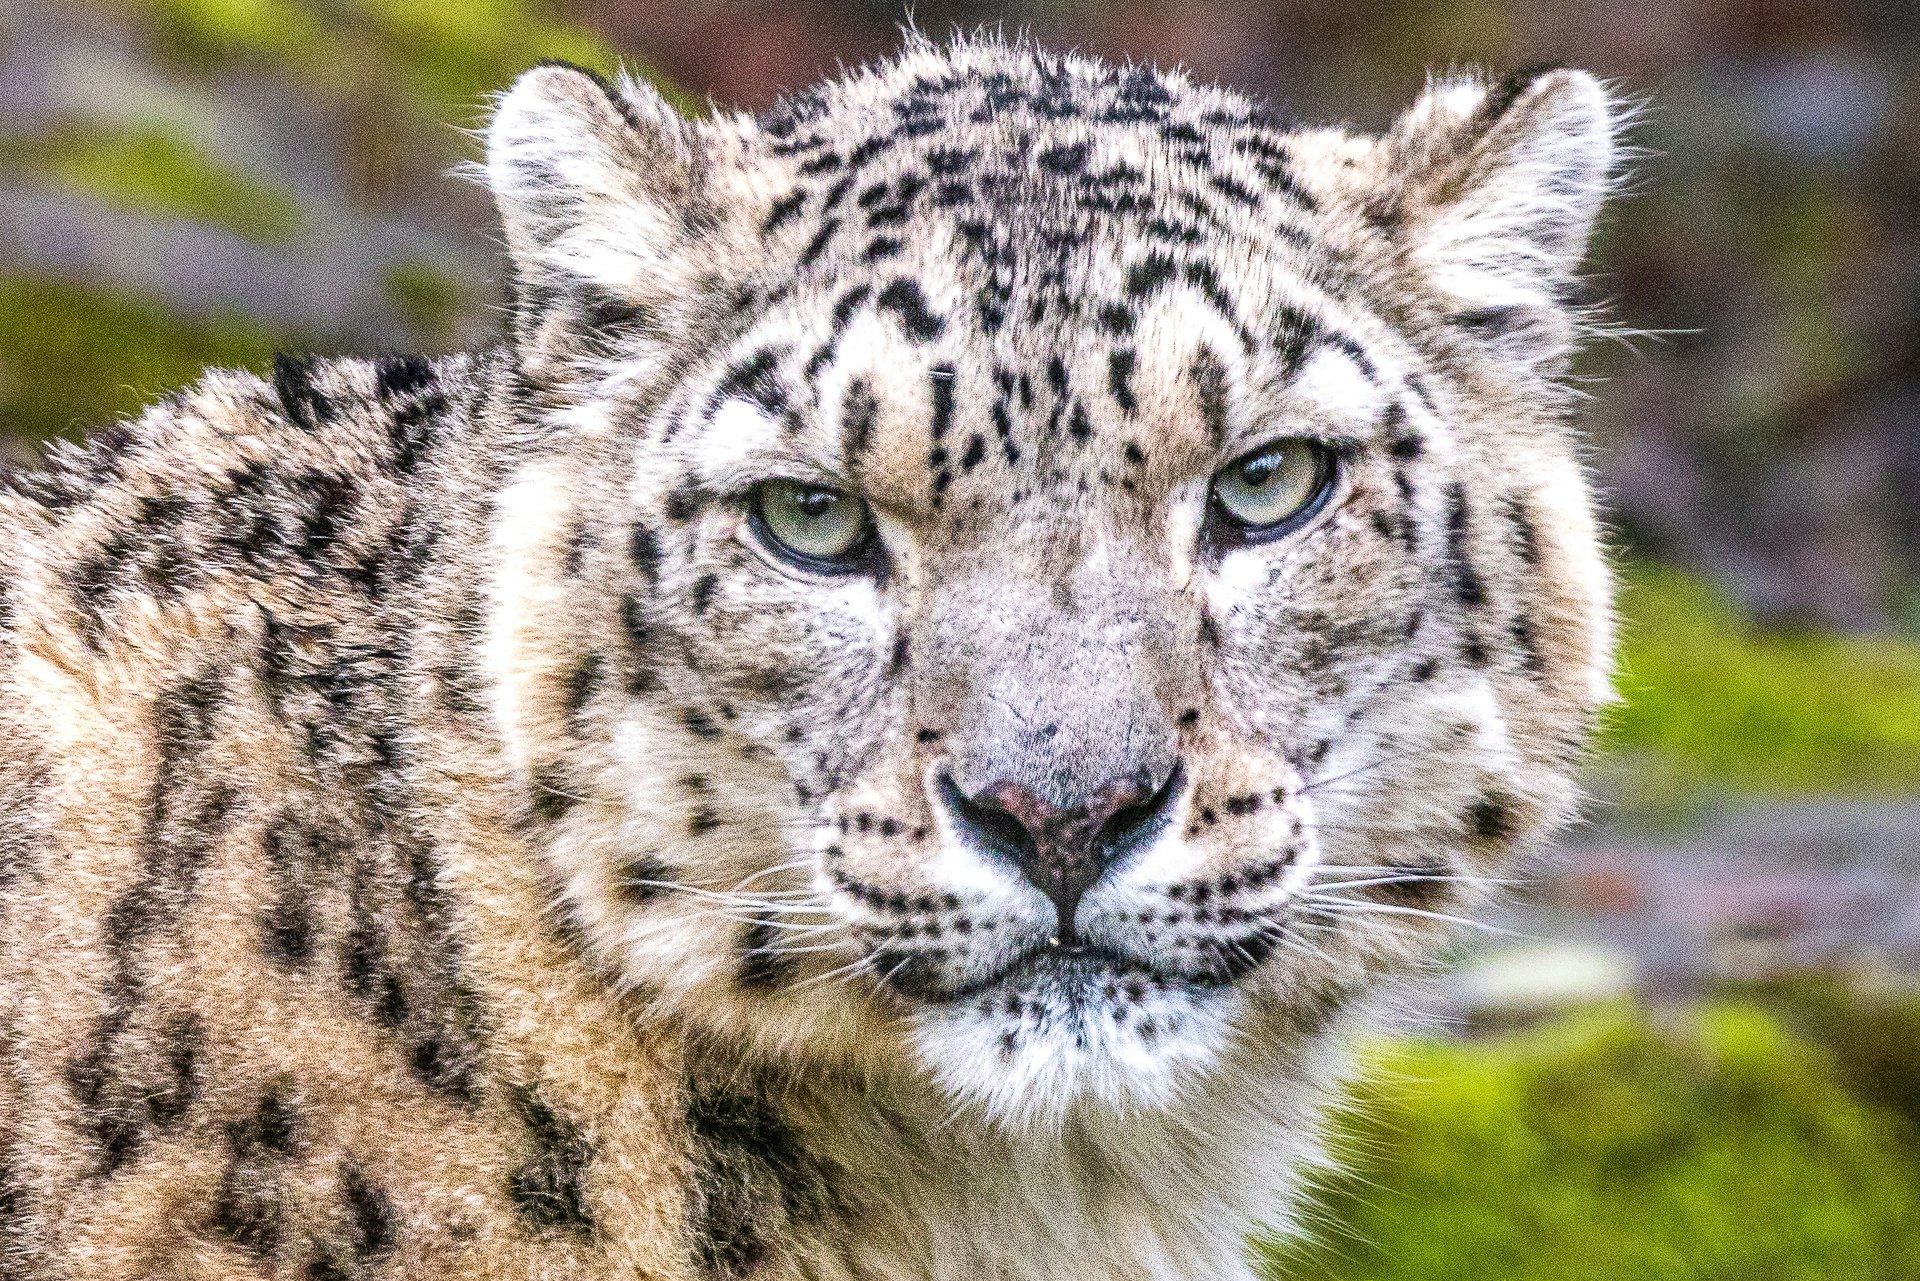 Snow Leopard Closeup